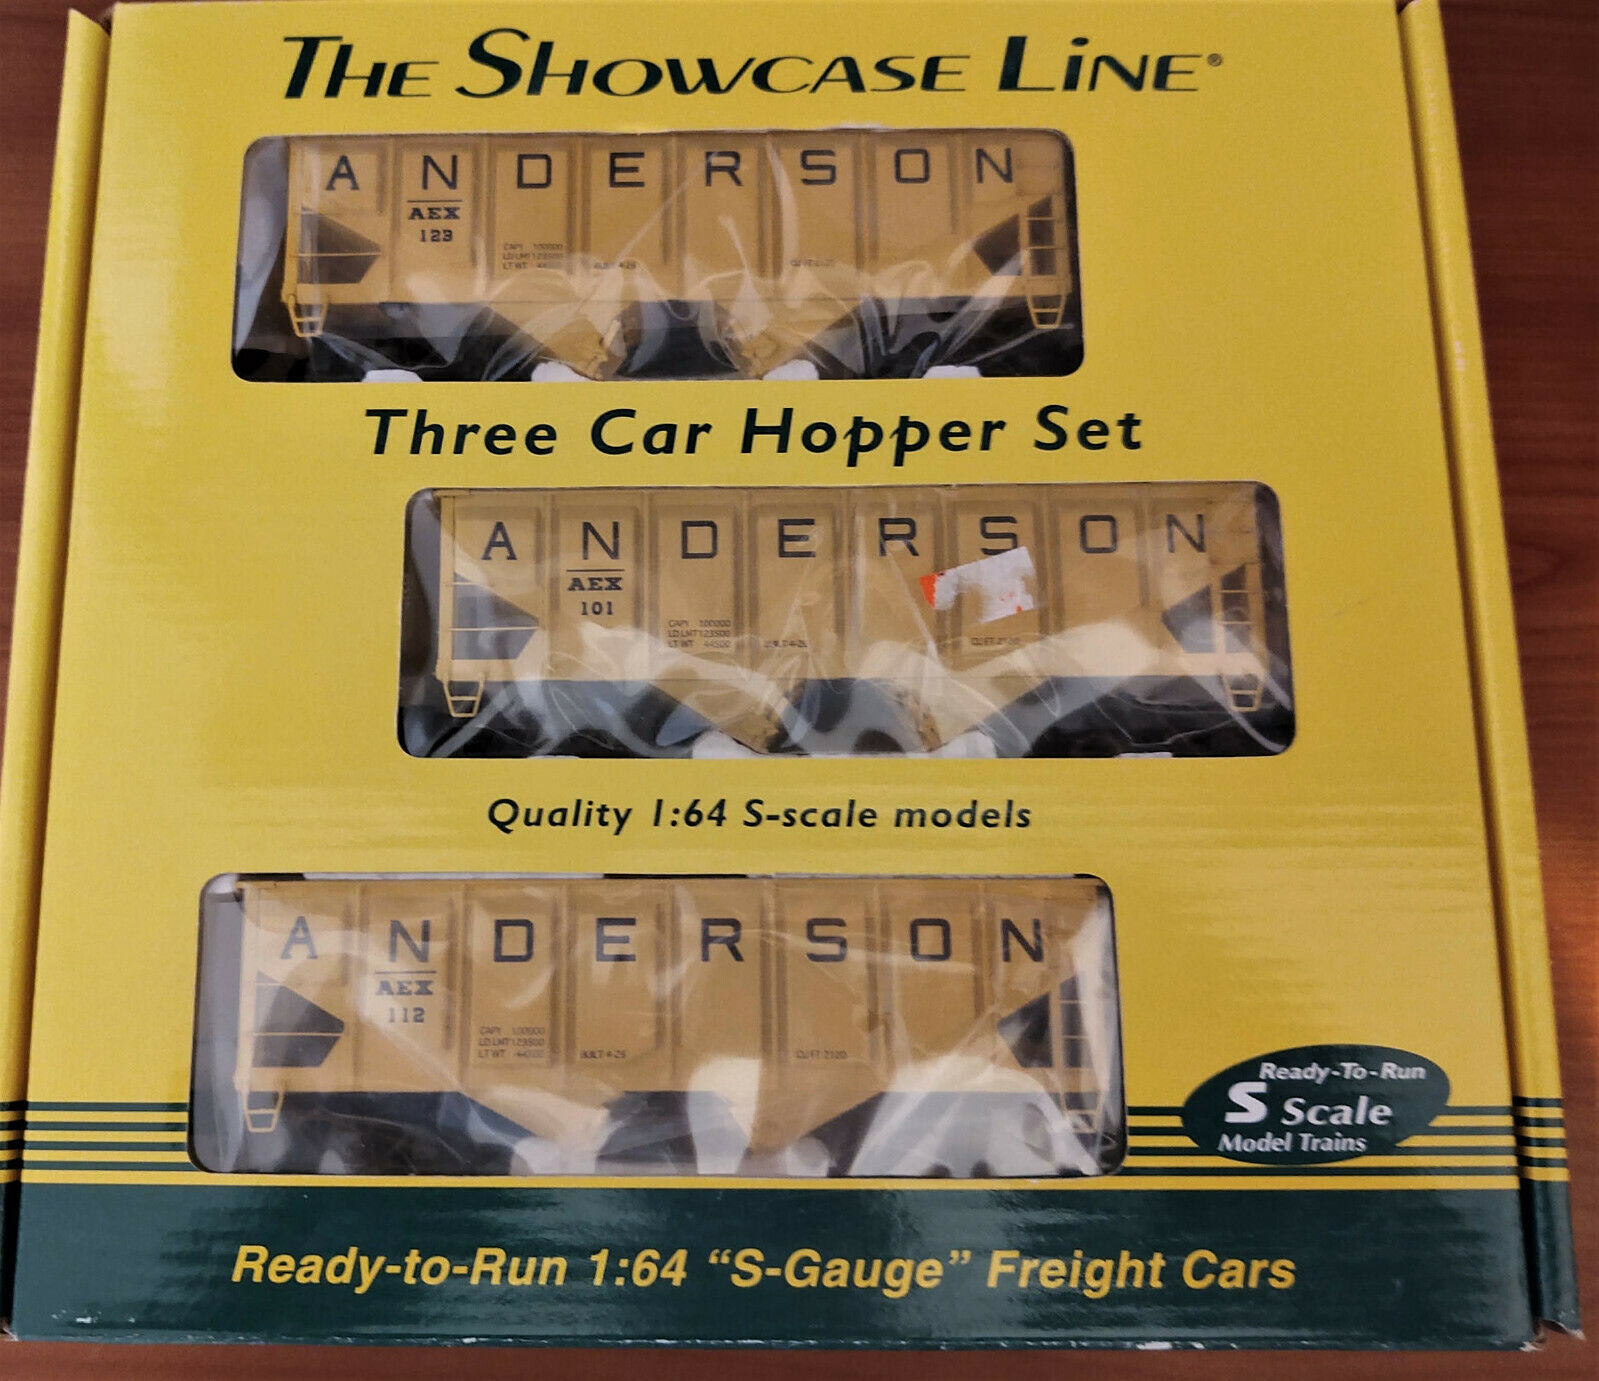 00982 S-helper Service Pan Hb Anderson 3 Car Hopper Set #1